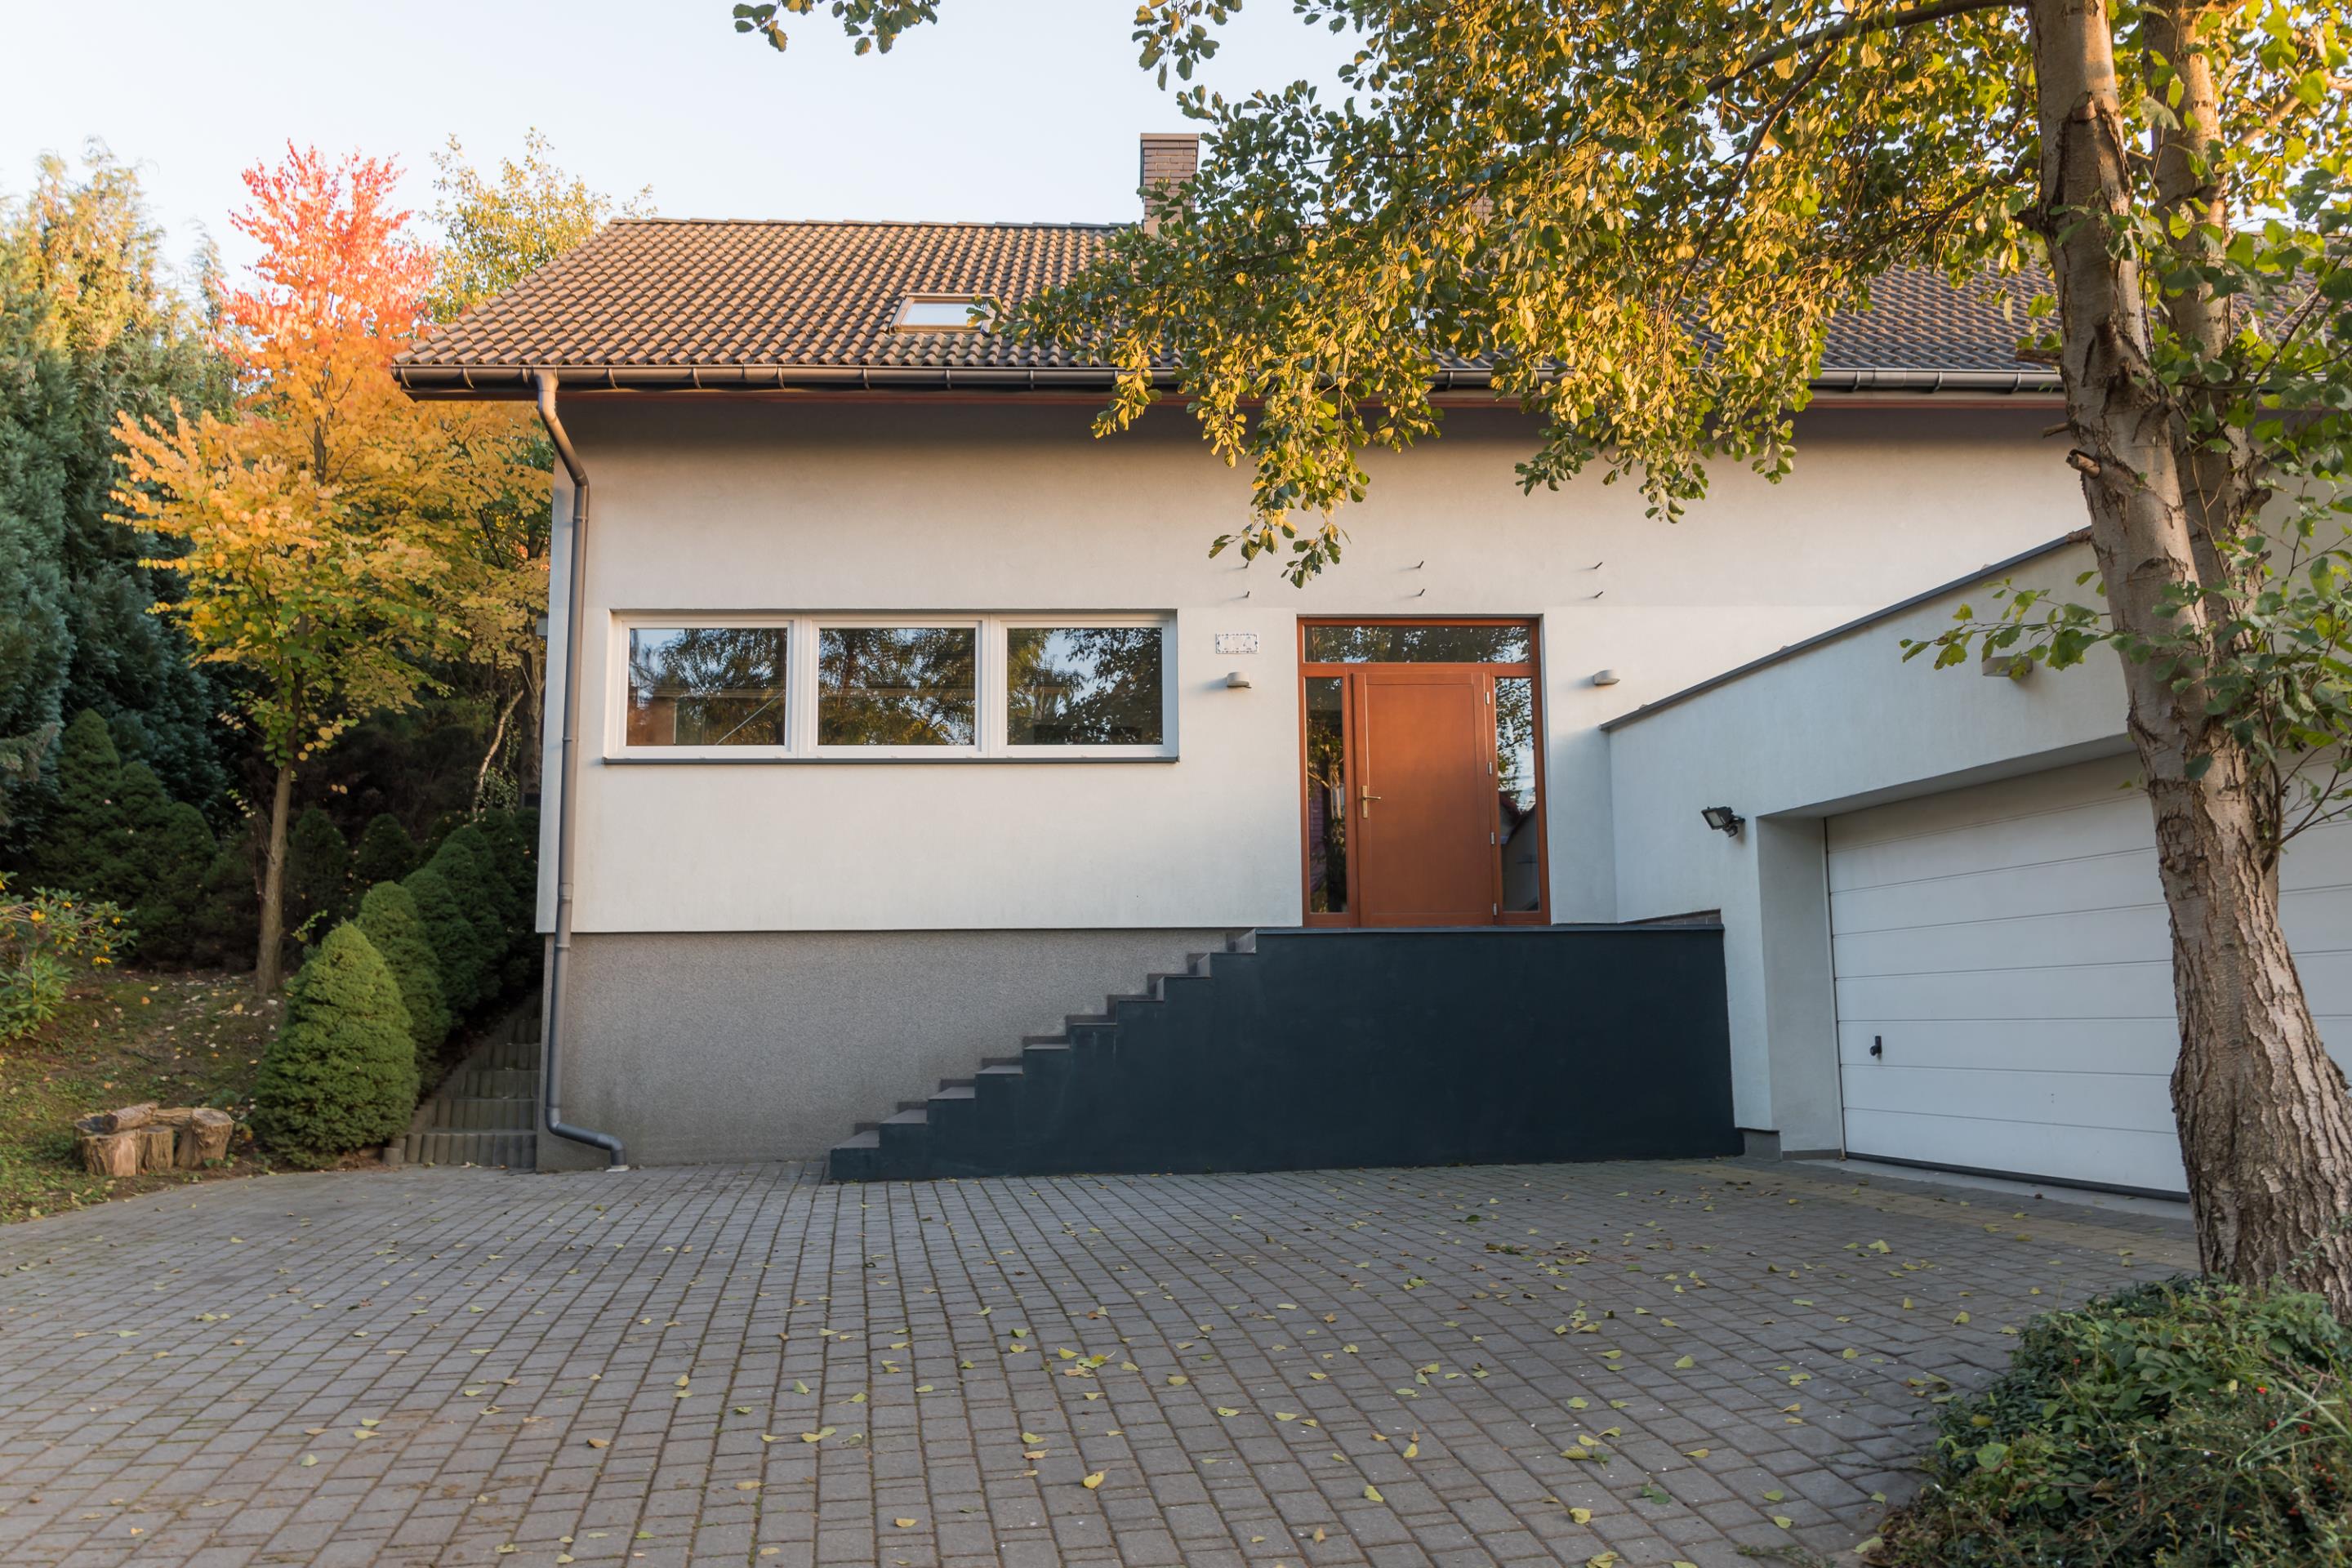 405 m2 modern house 11 km to the center of Krakow